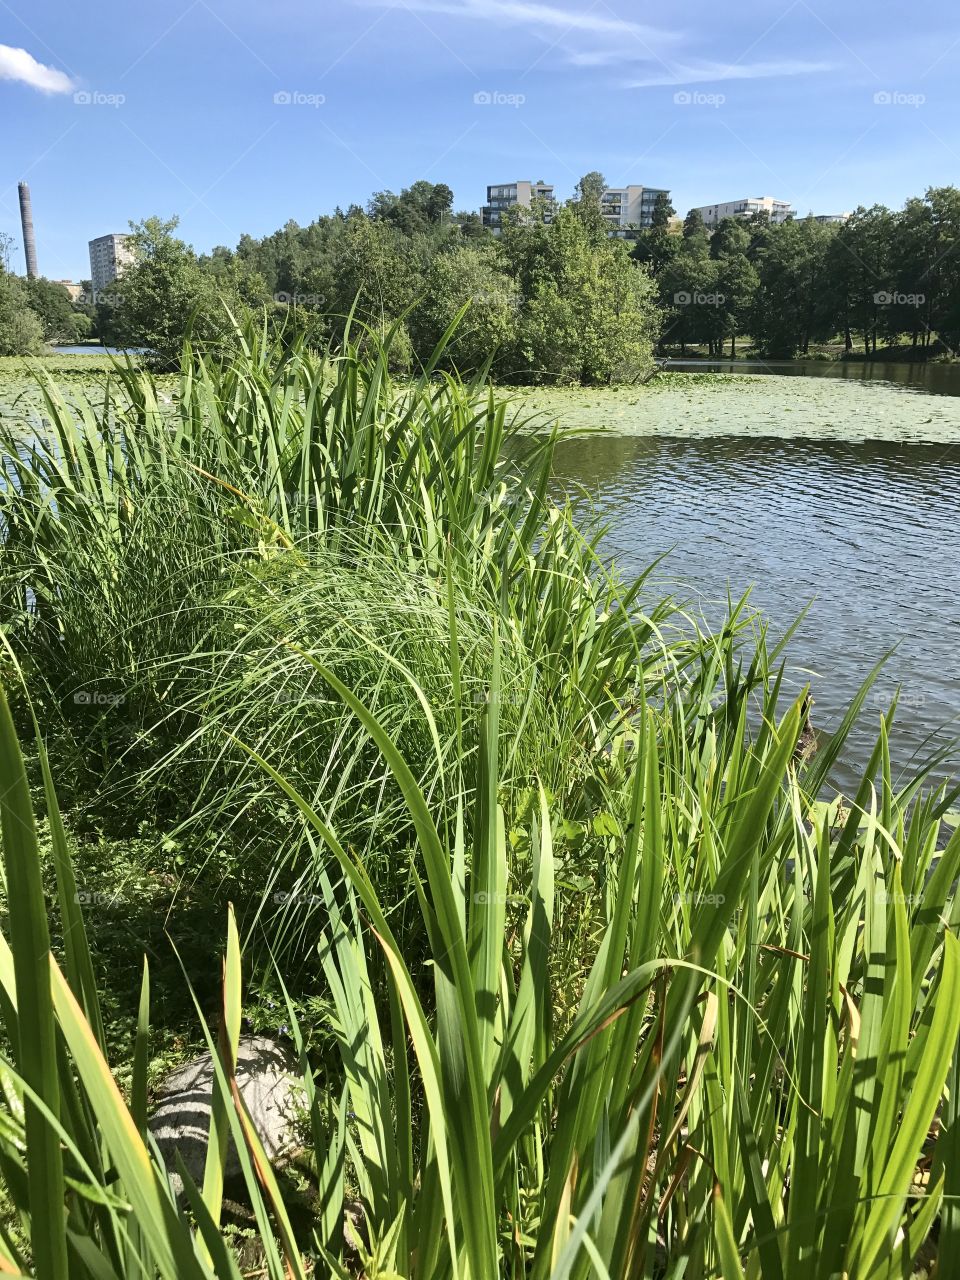 Grass lake